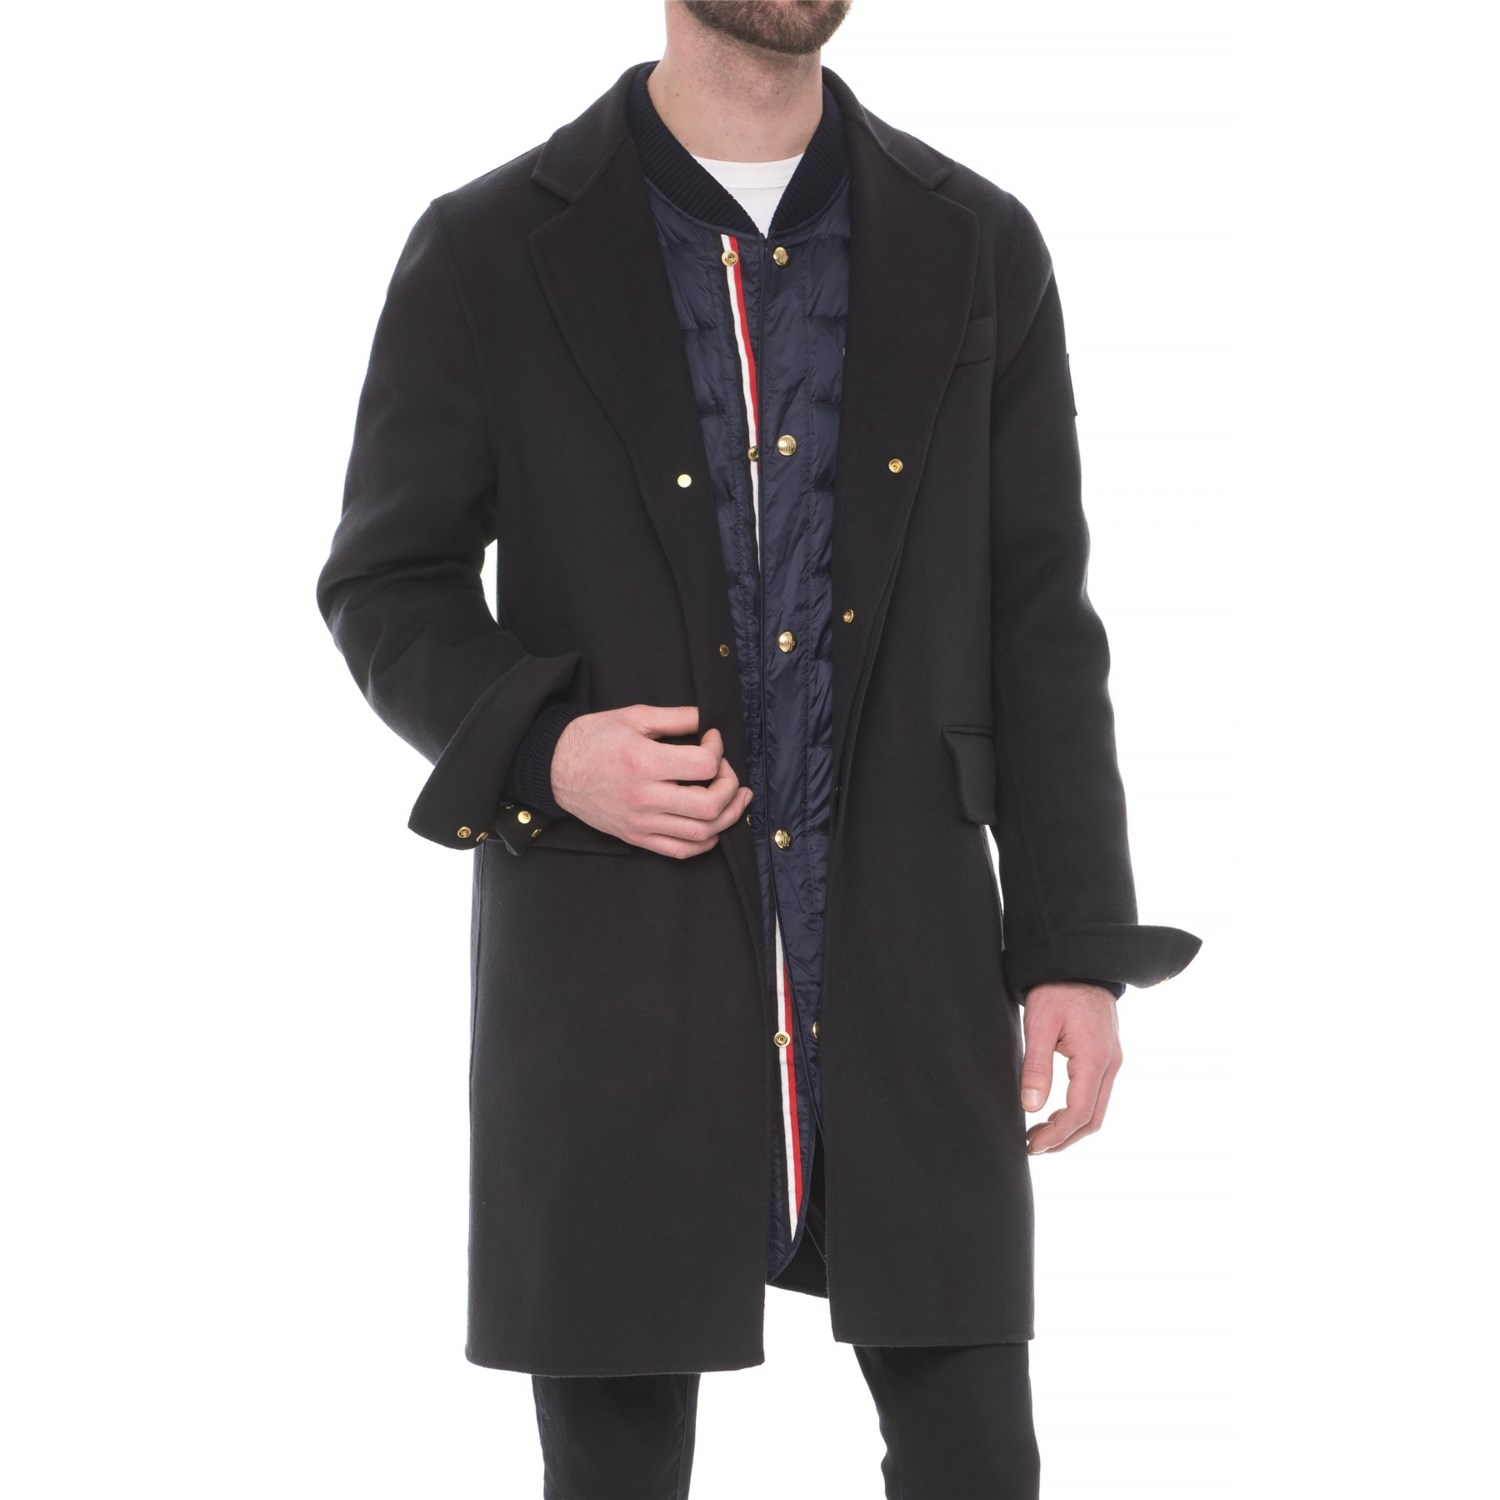 Moncler Gamme Bleu Jacket with Inner Down Jacket – Wool (For Men)